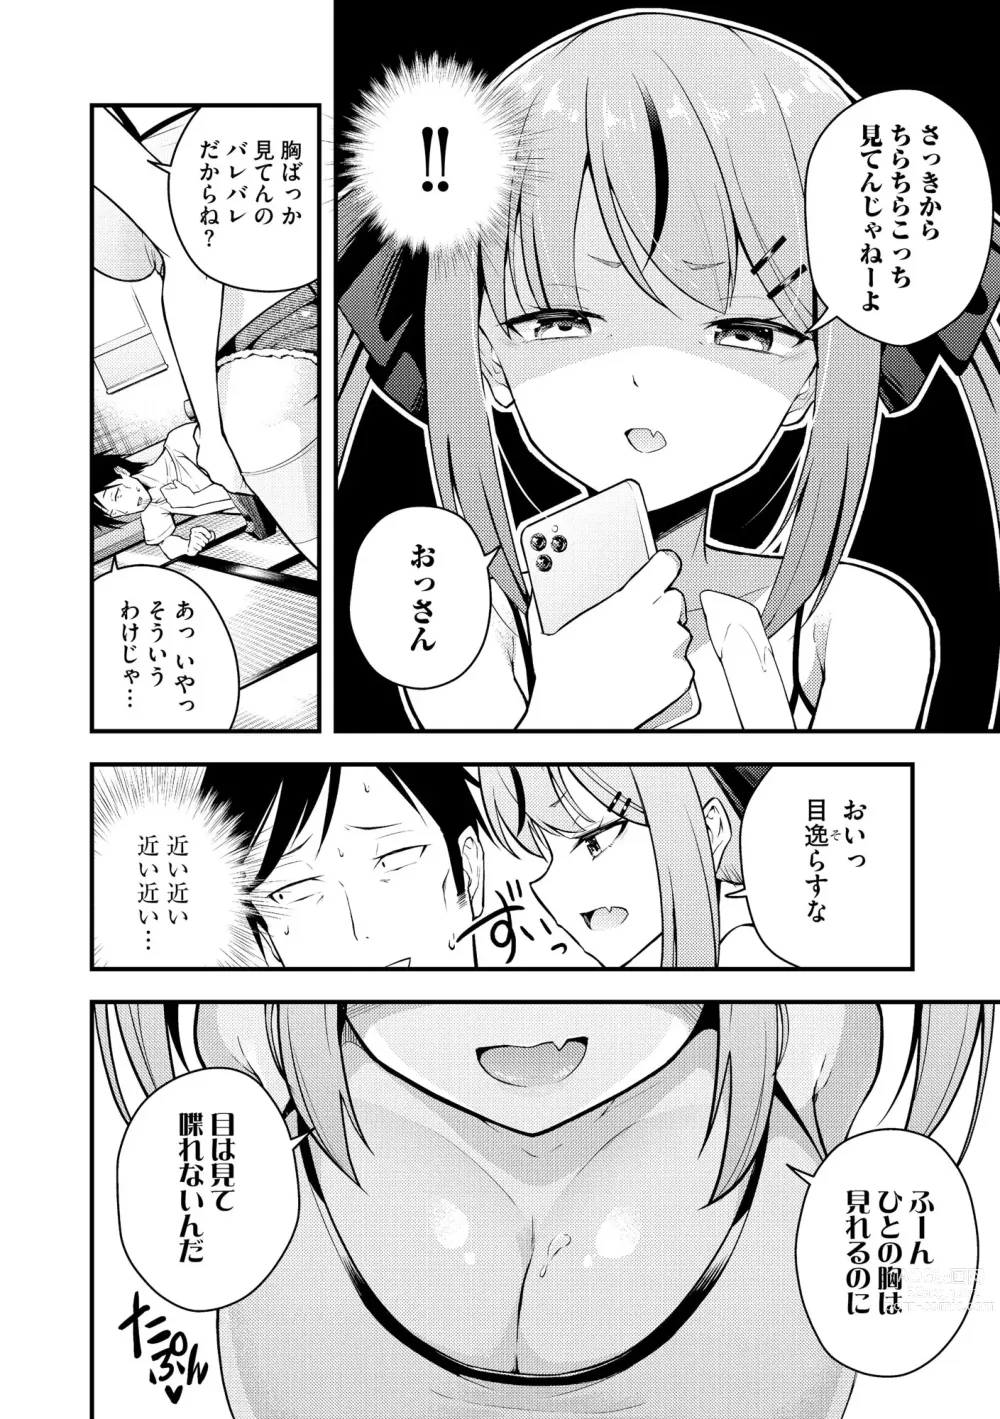 Page 10 of manga Cyberia Plus Vol. 16